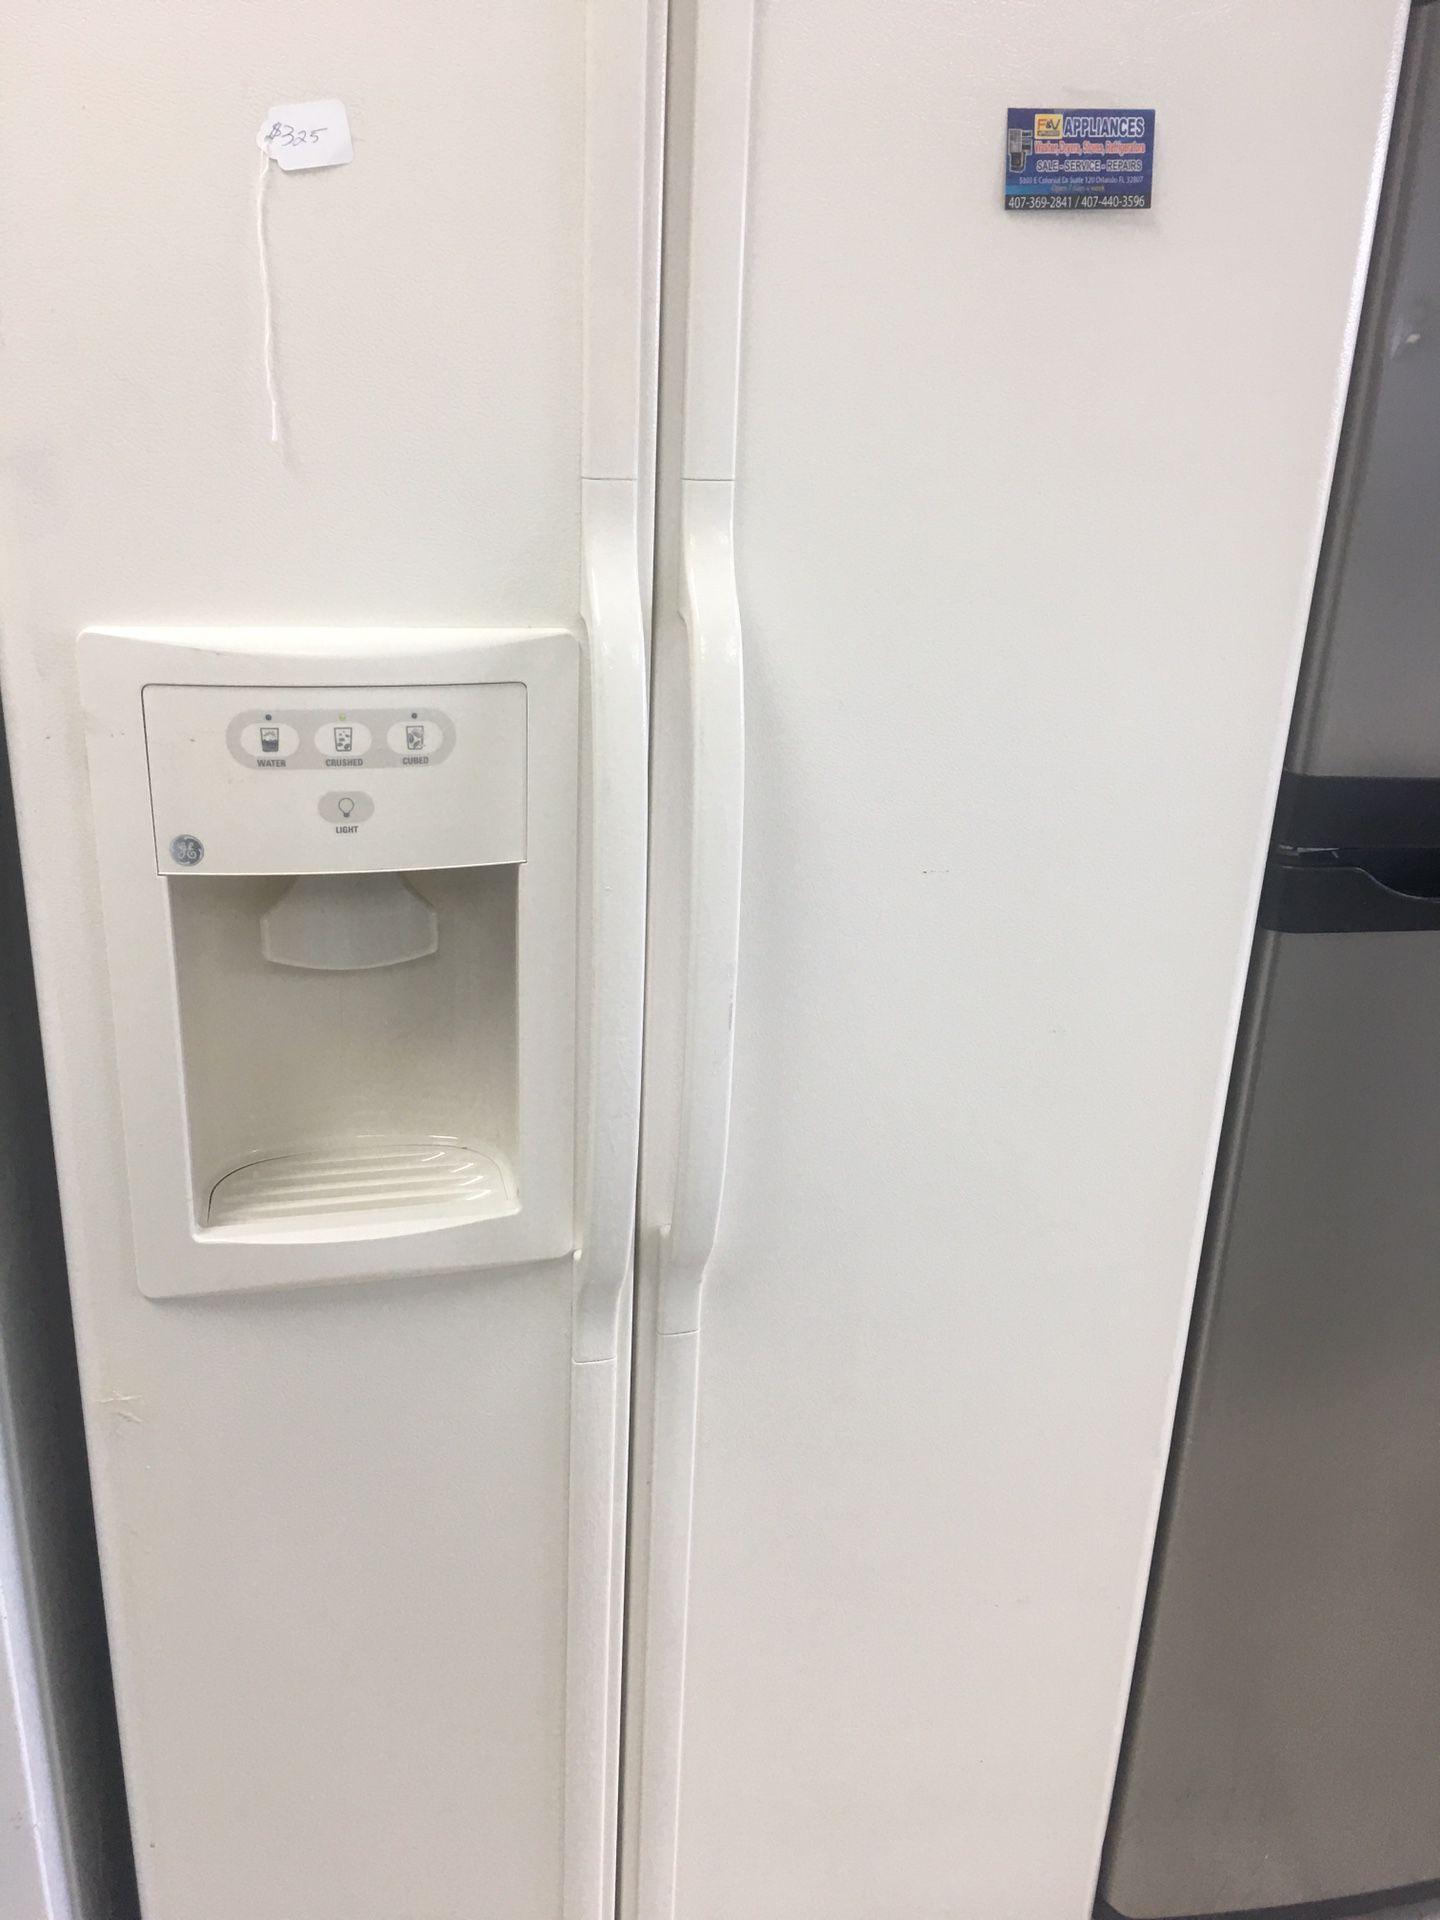 Whirlpool side-by-side refrigerator